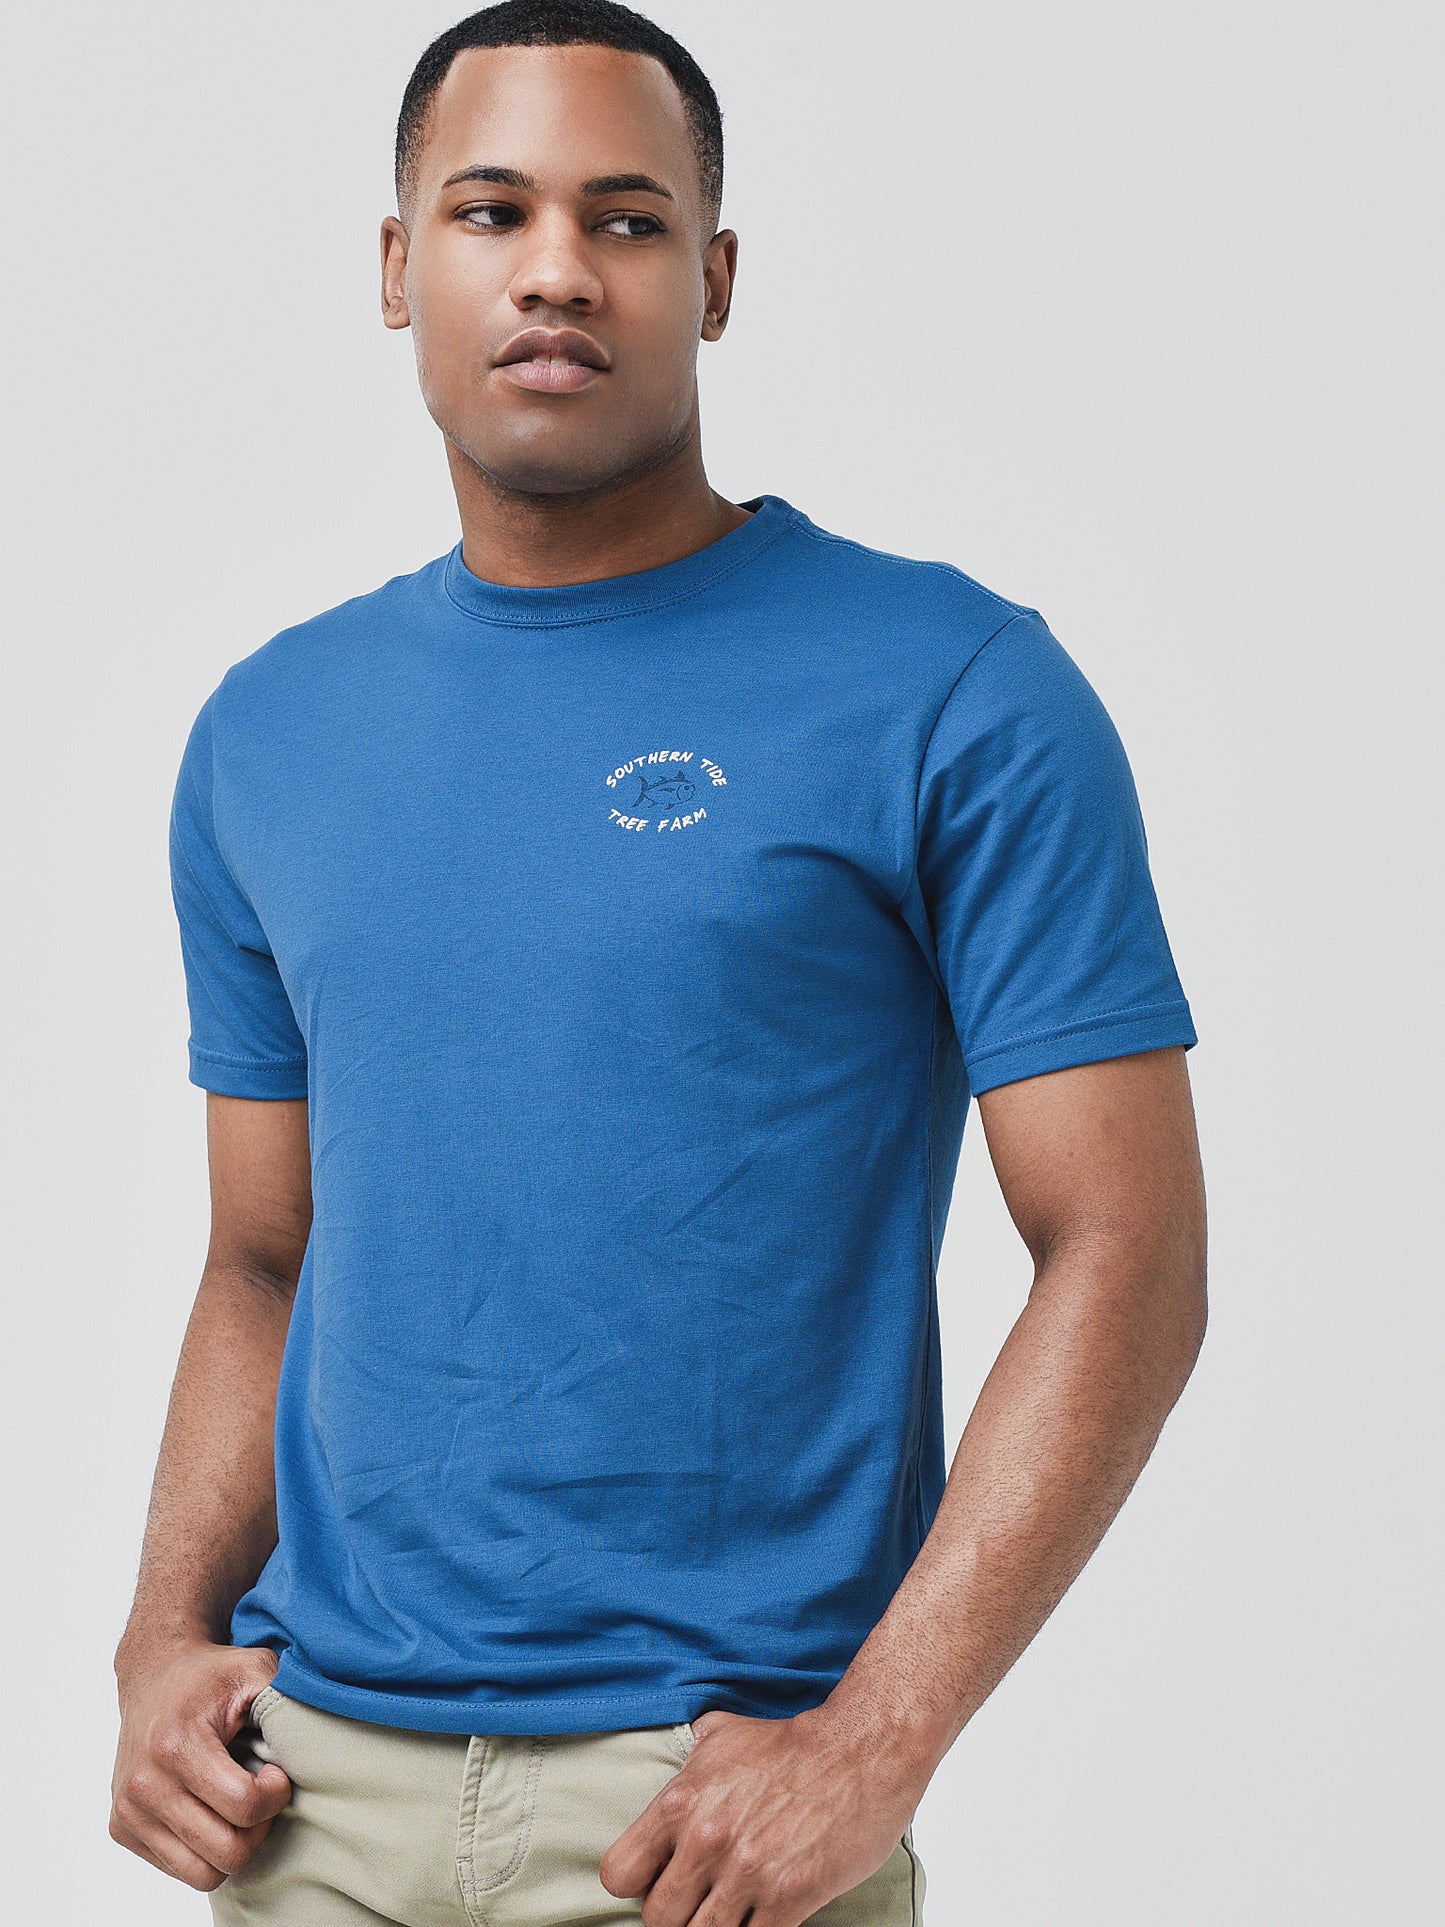 Southern Tide Men's Skipjacks Tree Farm T-Shirt